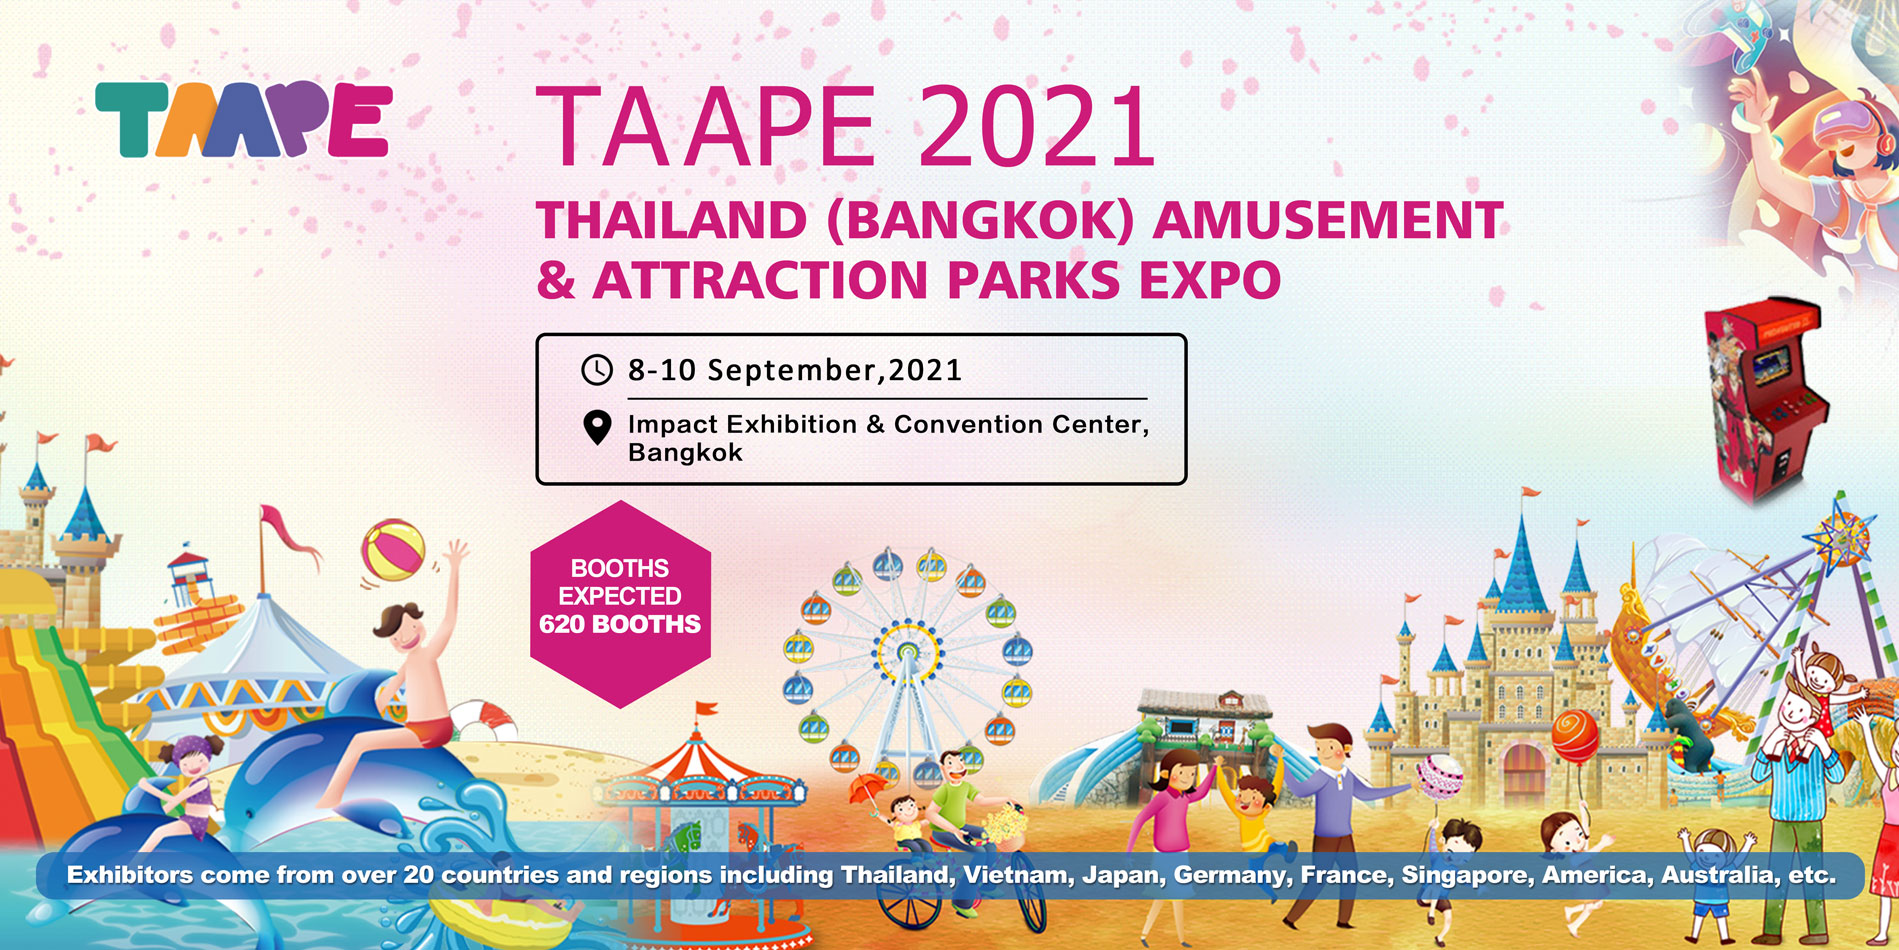 Thailand (Bangkok) Amusement and Attraction Parks Expo